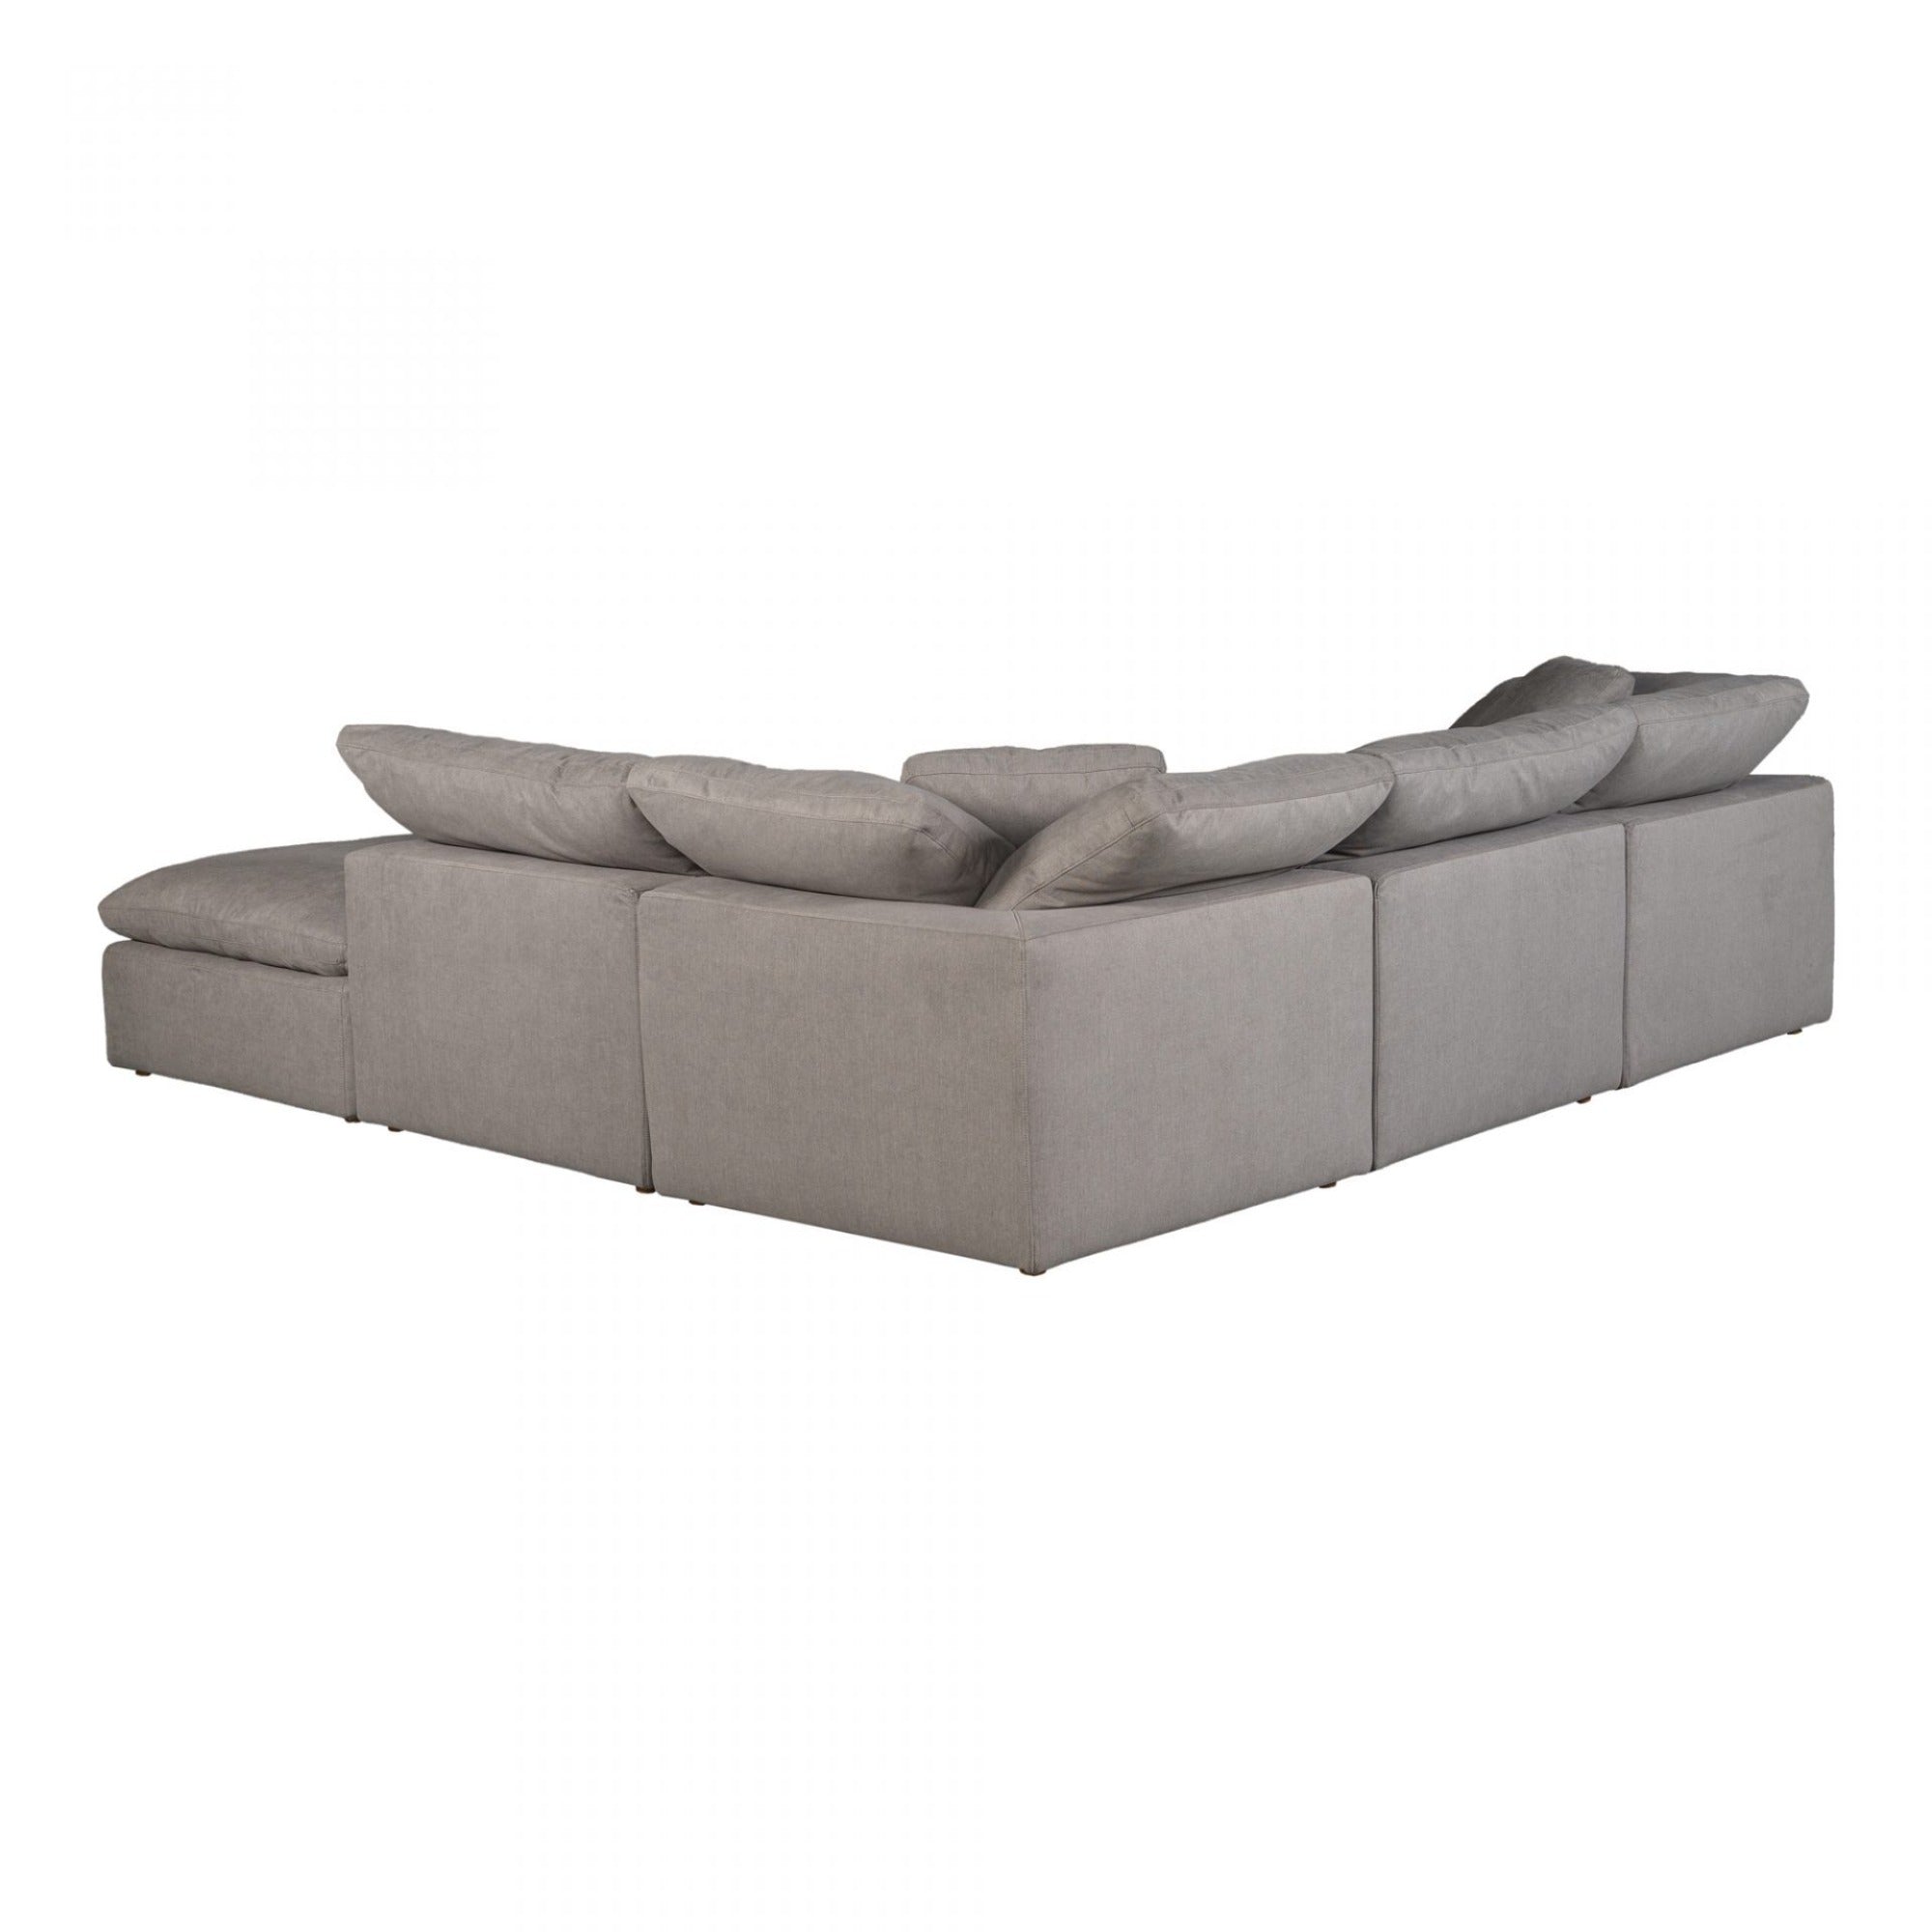 Clay Dream Modular Sectional- StyleMeGHD - Modern Sectional Sofa